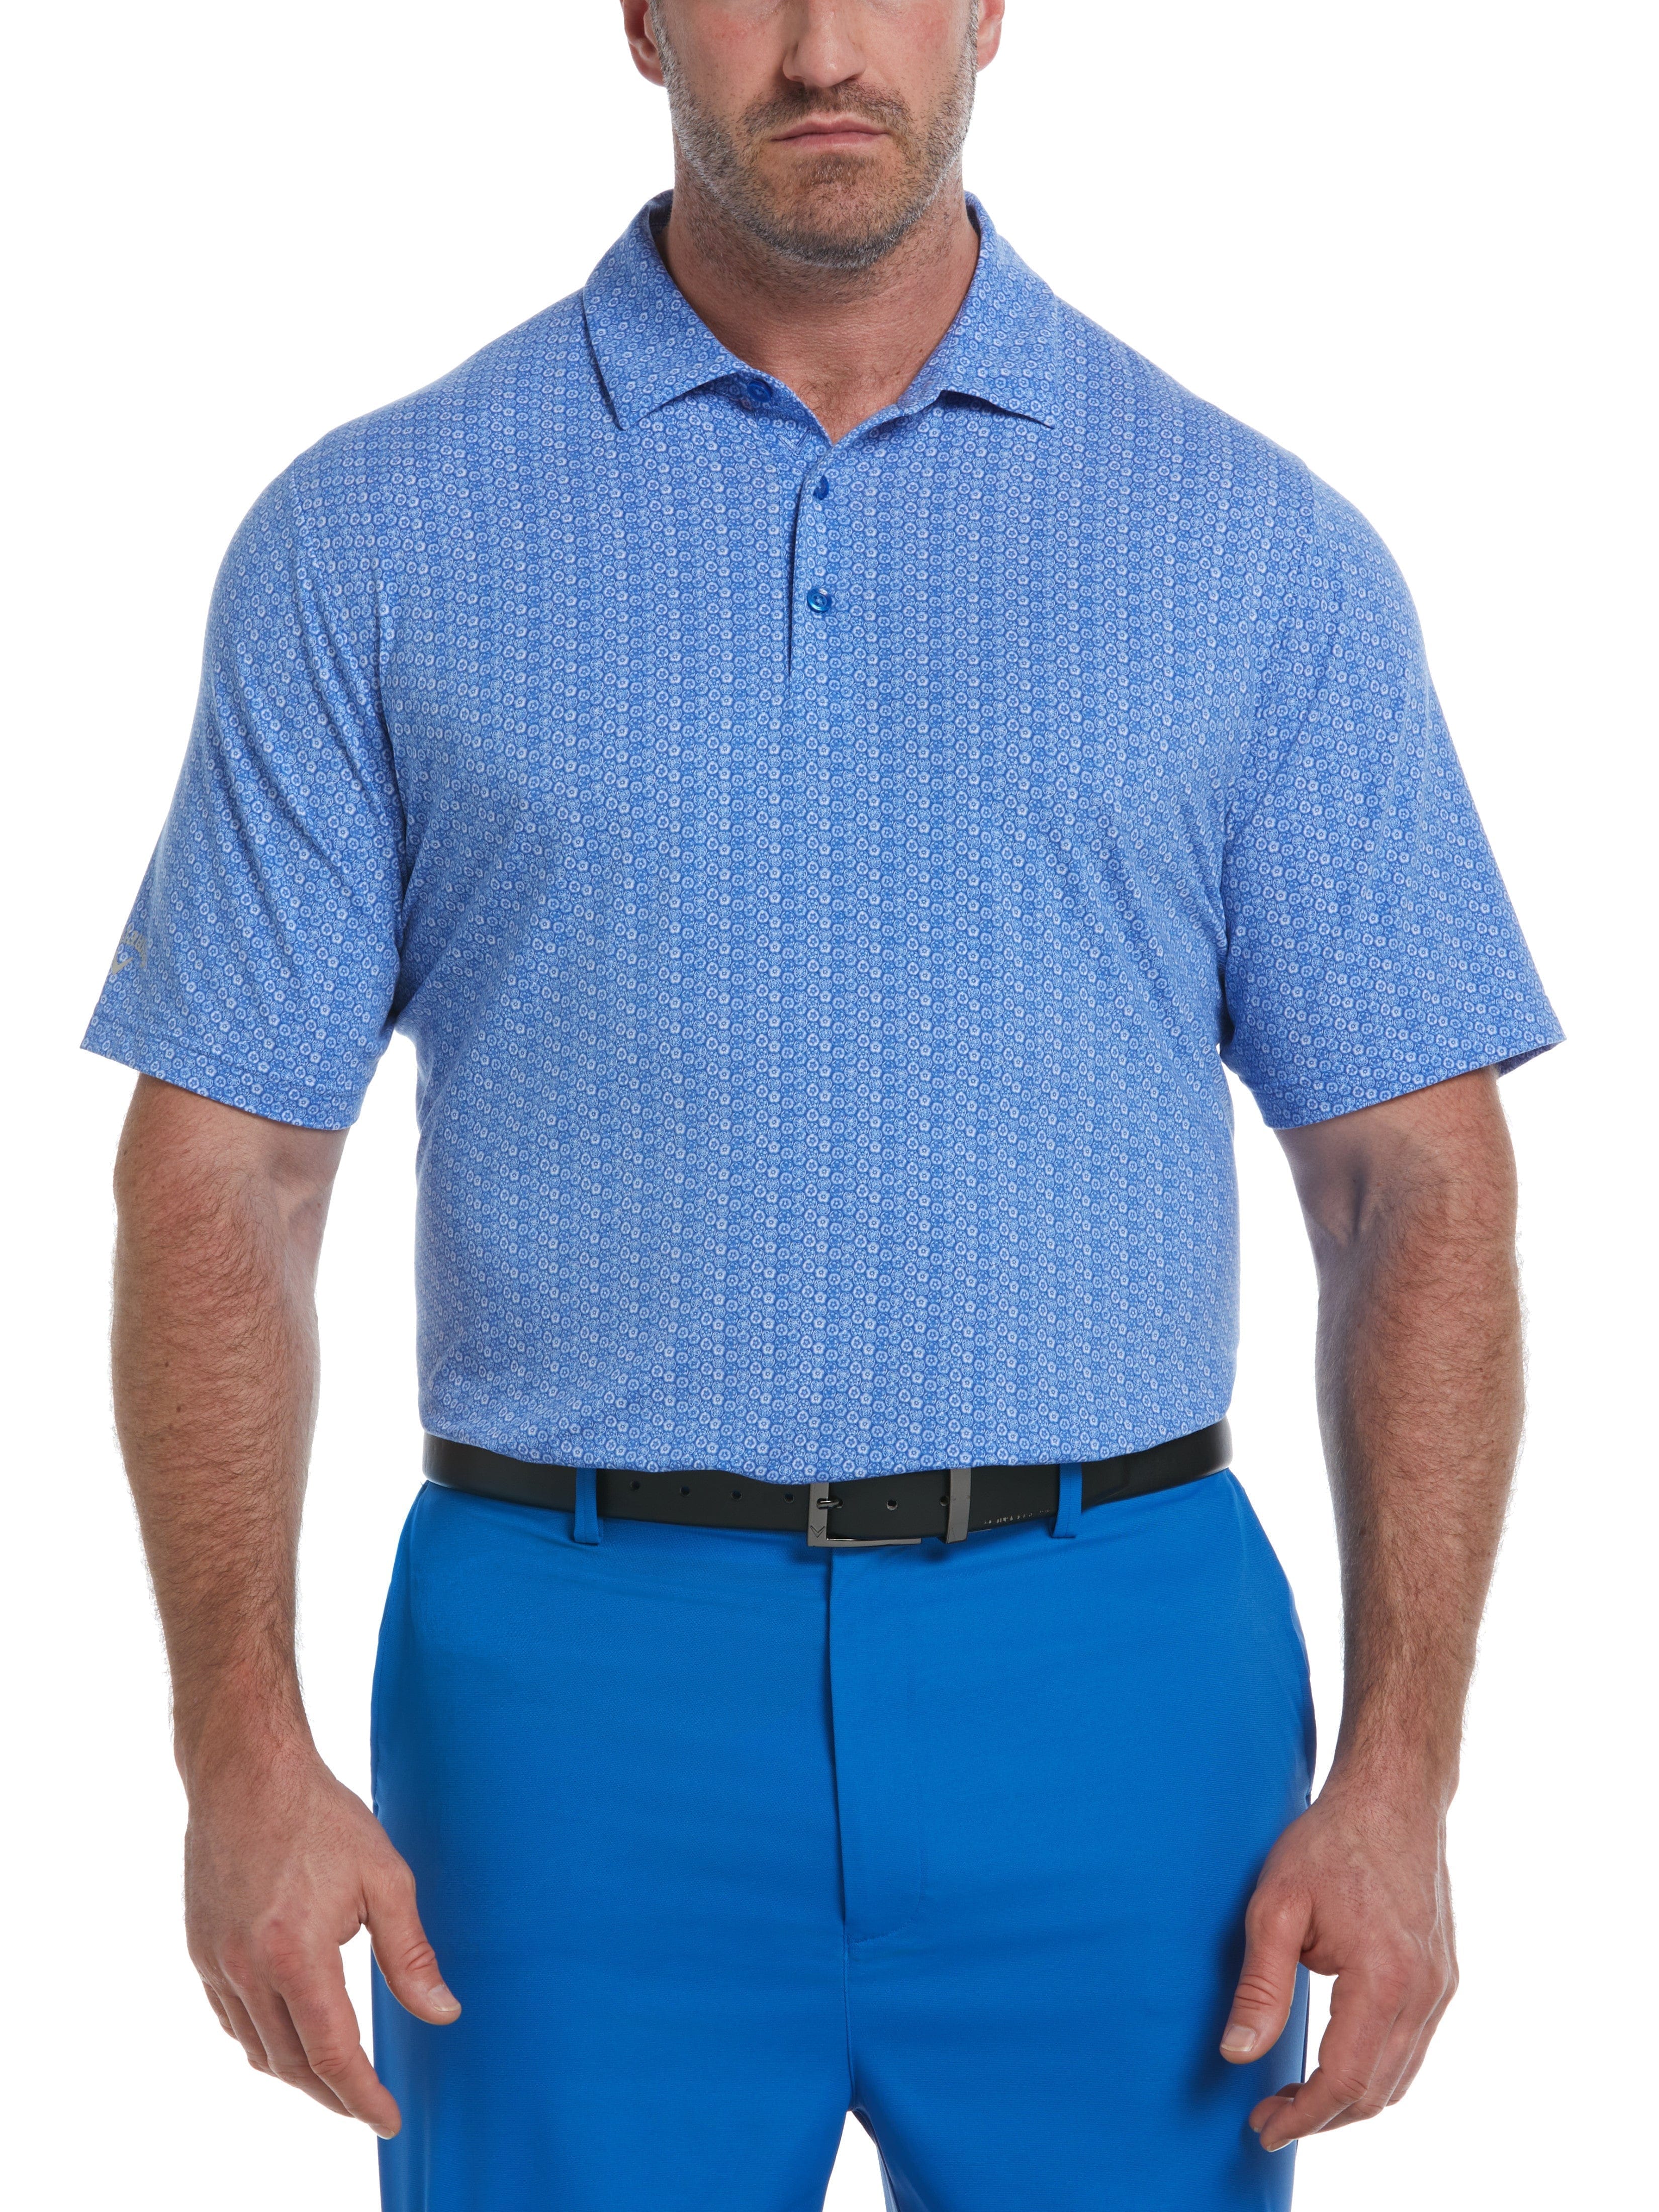 Callaway Apparel Mens Big & Tall Allover Tie Dye Foulard Print Golf Polo Shirt, Size 2X, Magnetic Blue, Polyester/Cotton/Elastane | Golf Apparel Shop